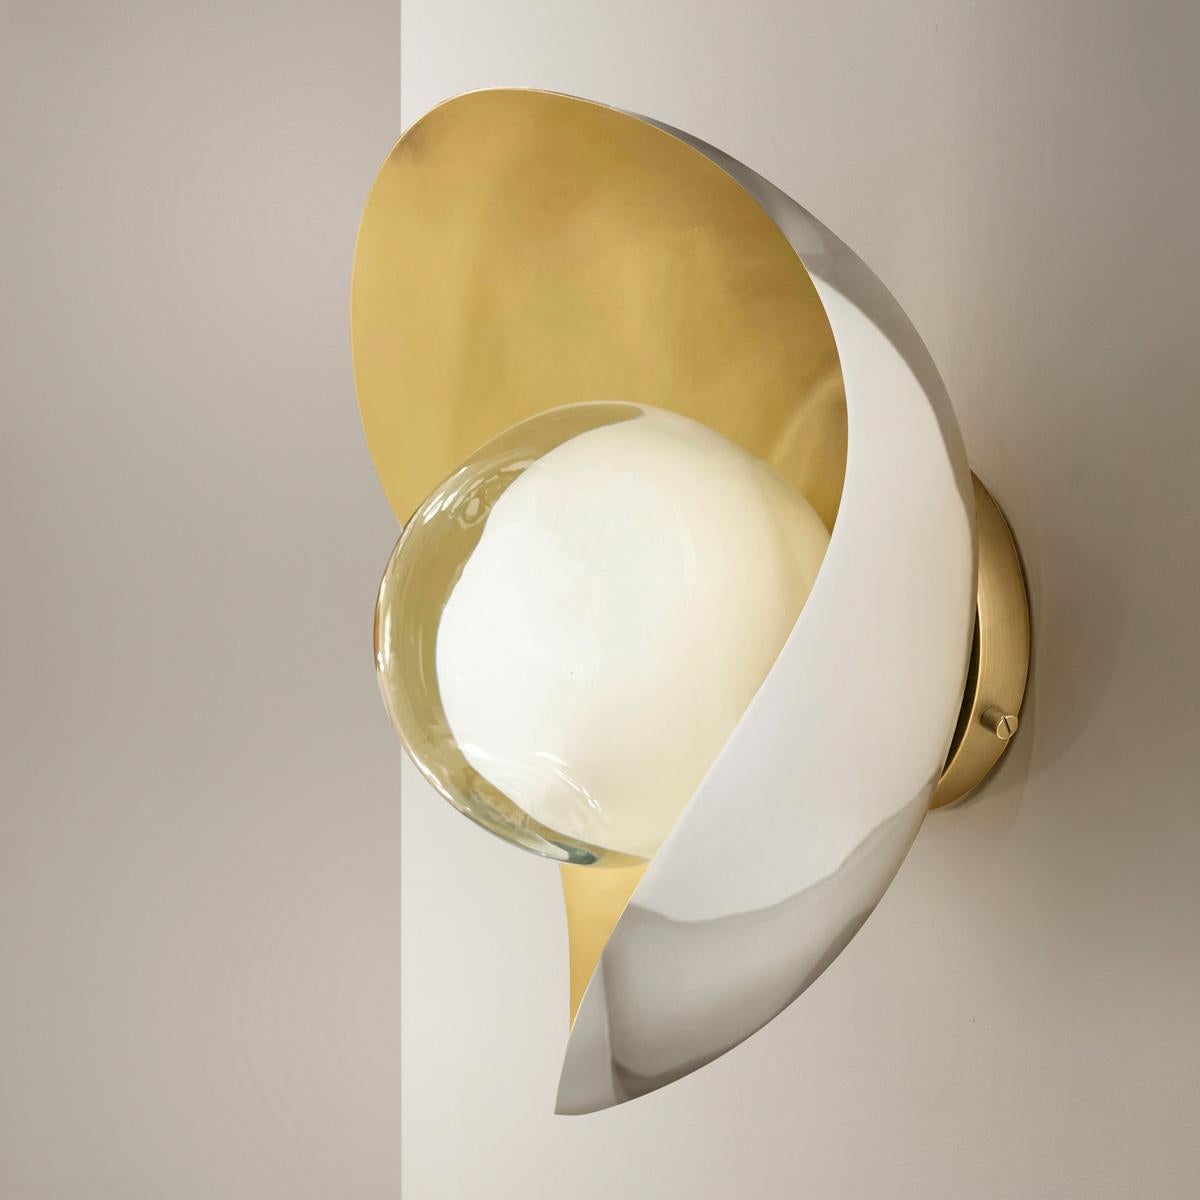 Contemporary Perla Wall Light by Gaspare Asaro-Satin Brass/Bronze Finish For Sale